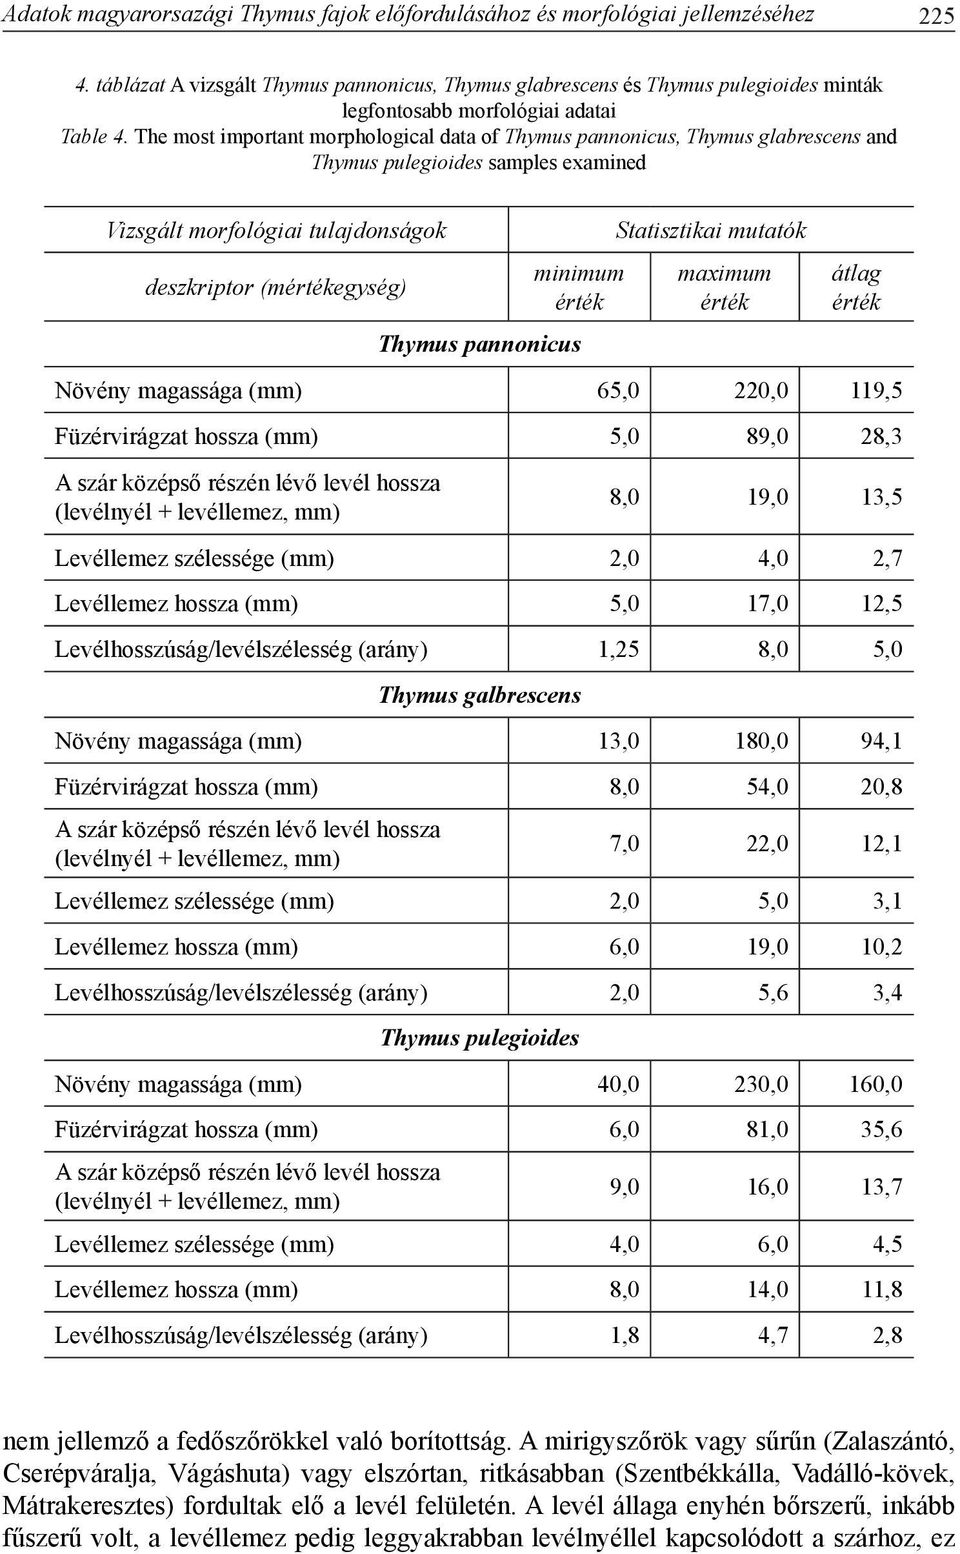 The most important morphological data of Thymus pannonicus, Thymus glabrescens and Thymus pulegioides samples examined Vizsgált morfológiai tulajdonságok deszkriptor (mértékegység) minimum érték